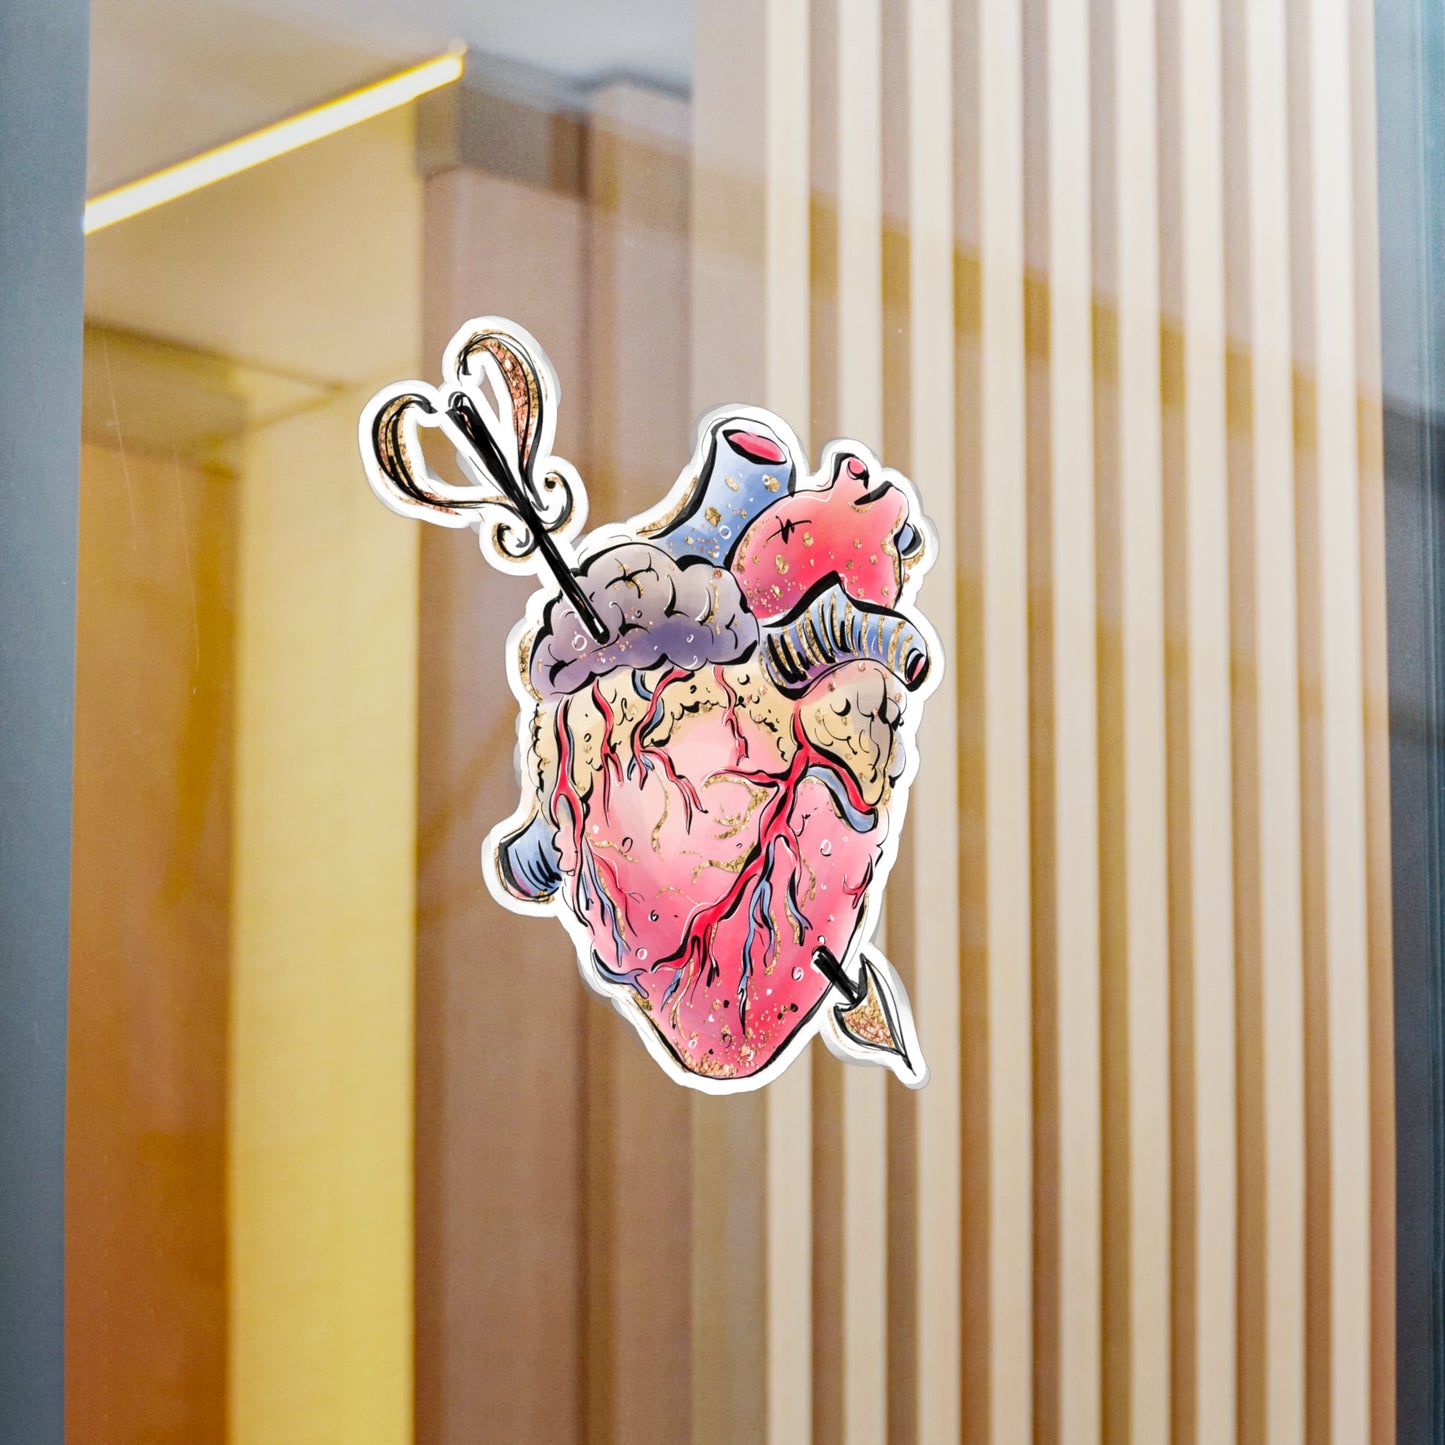 This Heart Vinyl Stickers